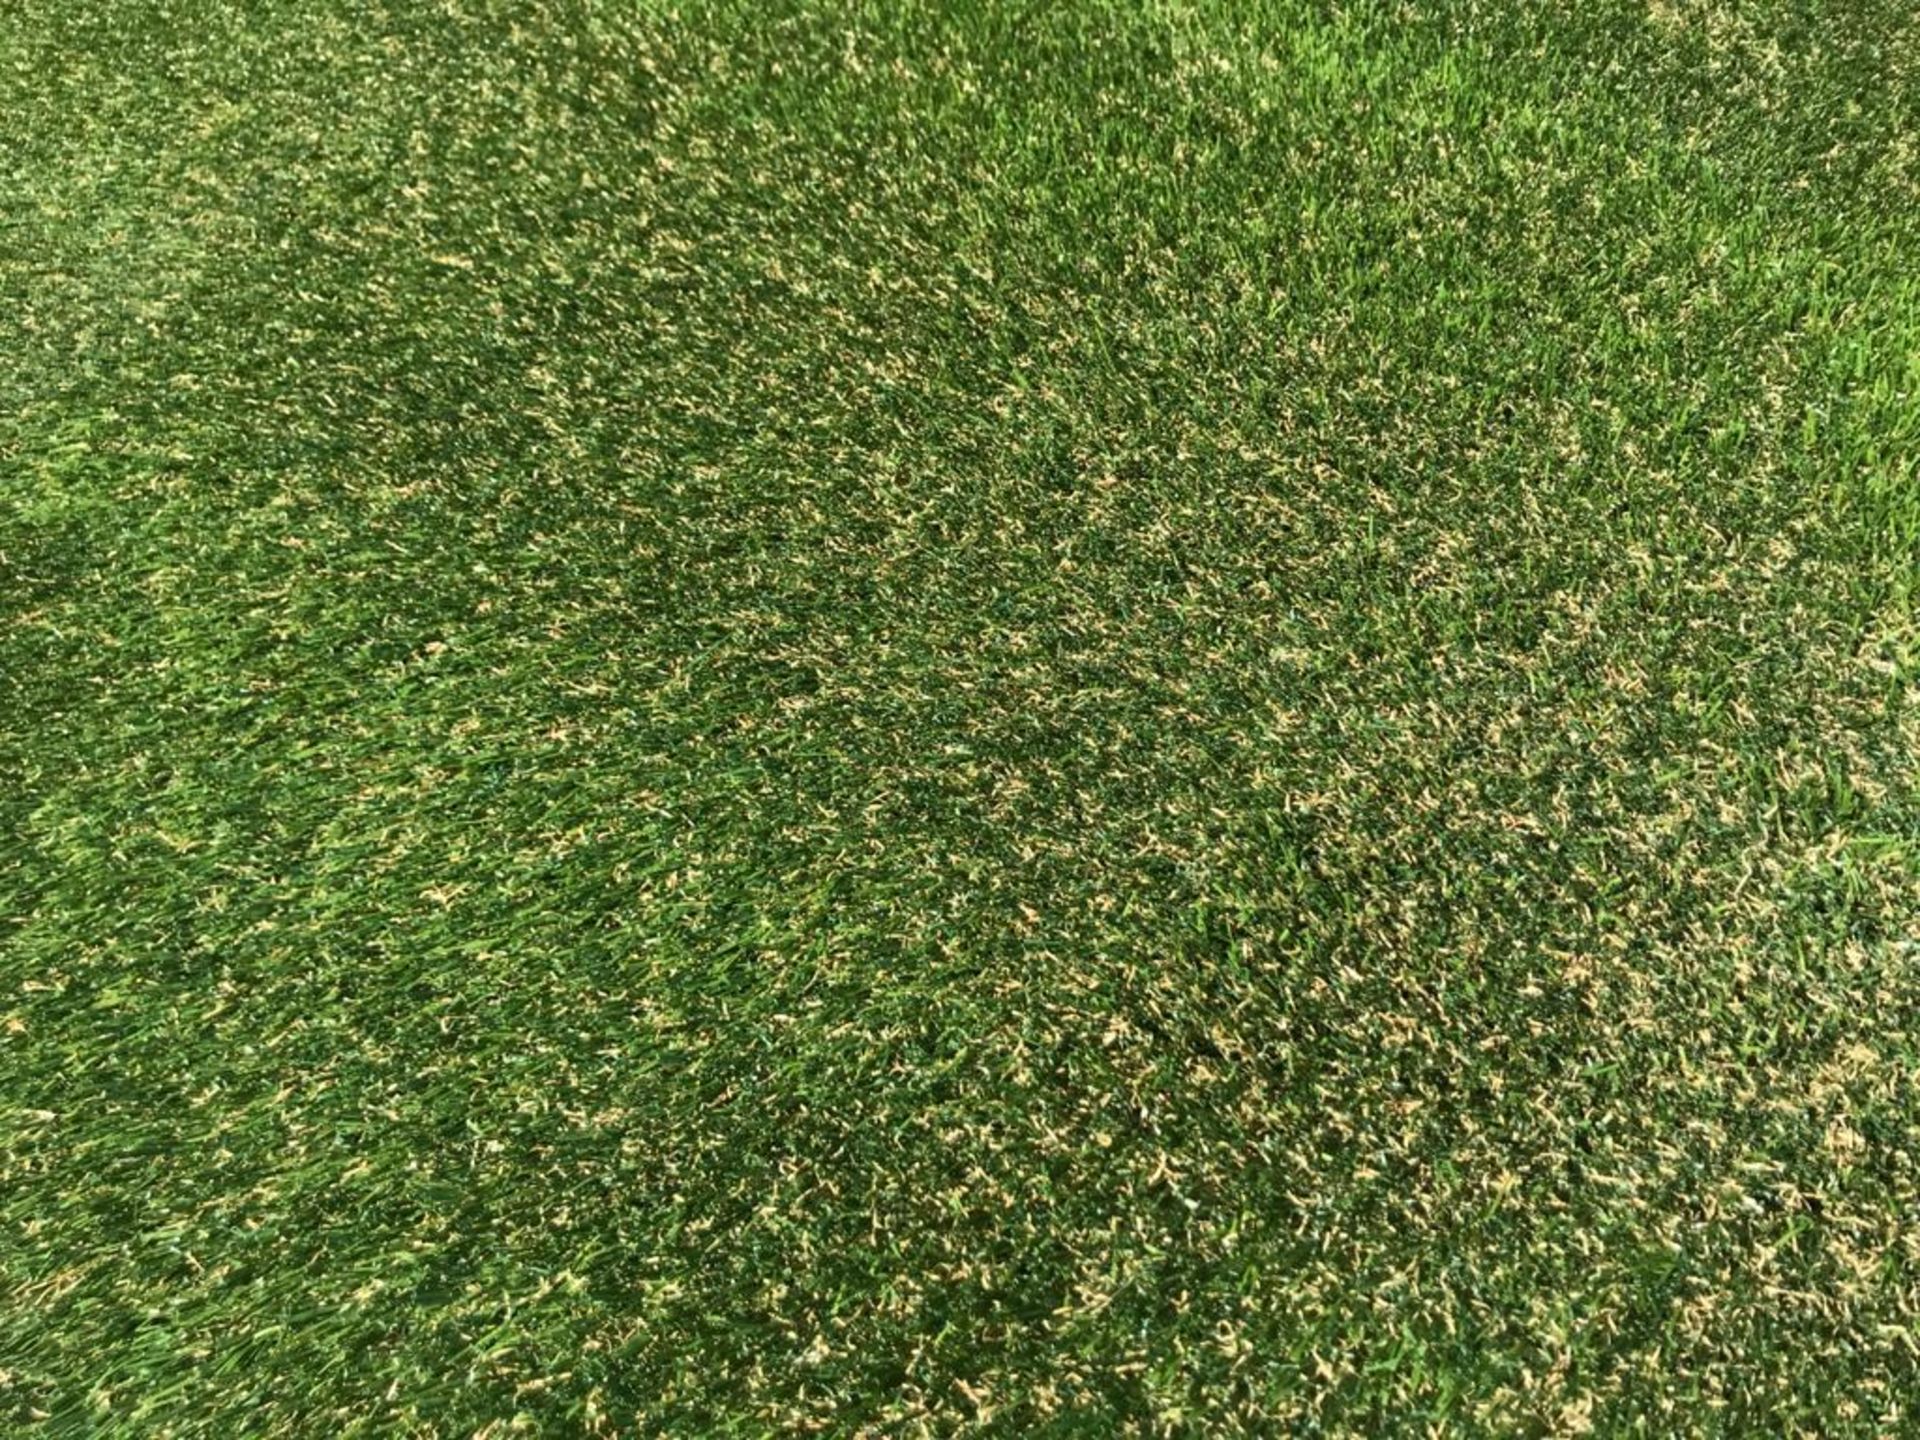 25x4m roll Playrite Nearly Grass Premium Artificial grass 35mm thick